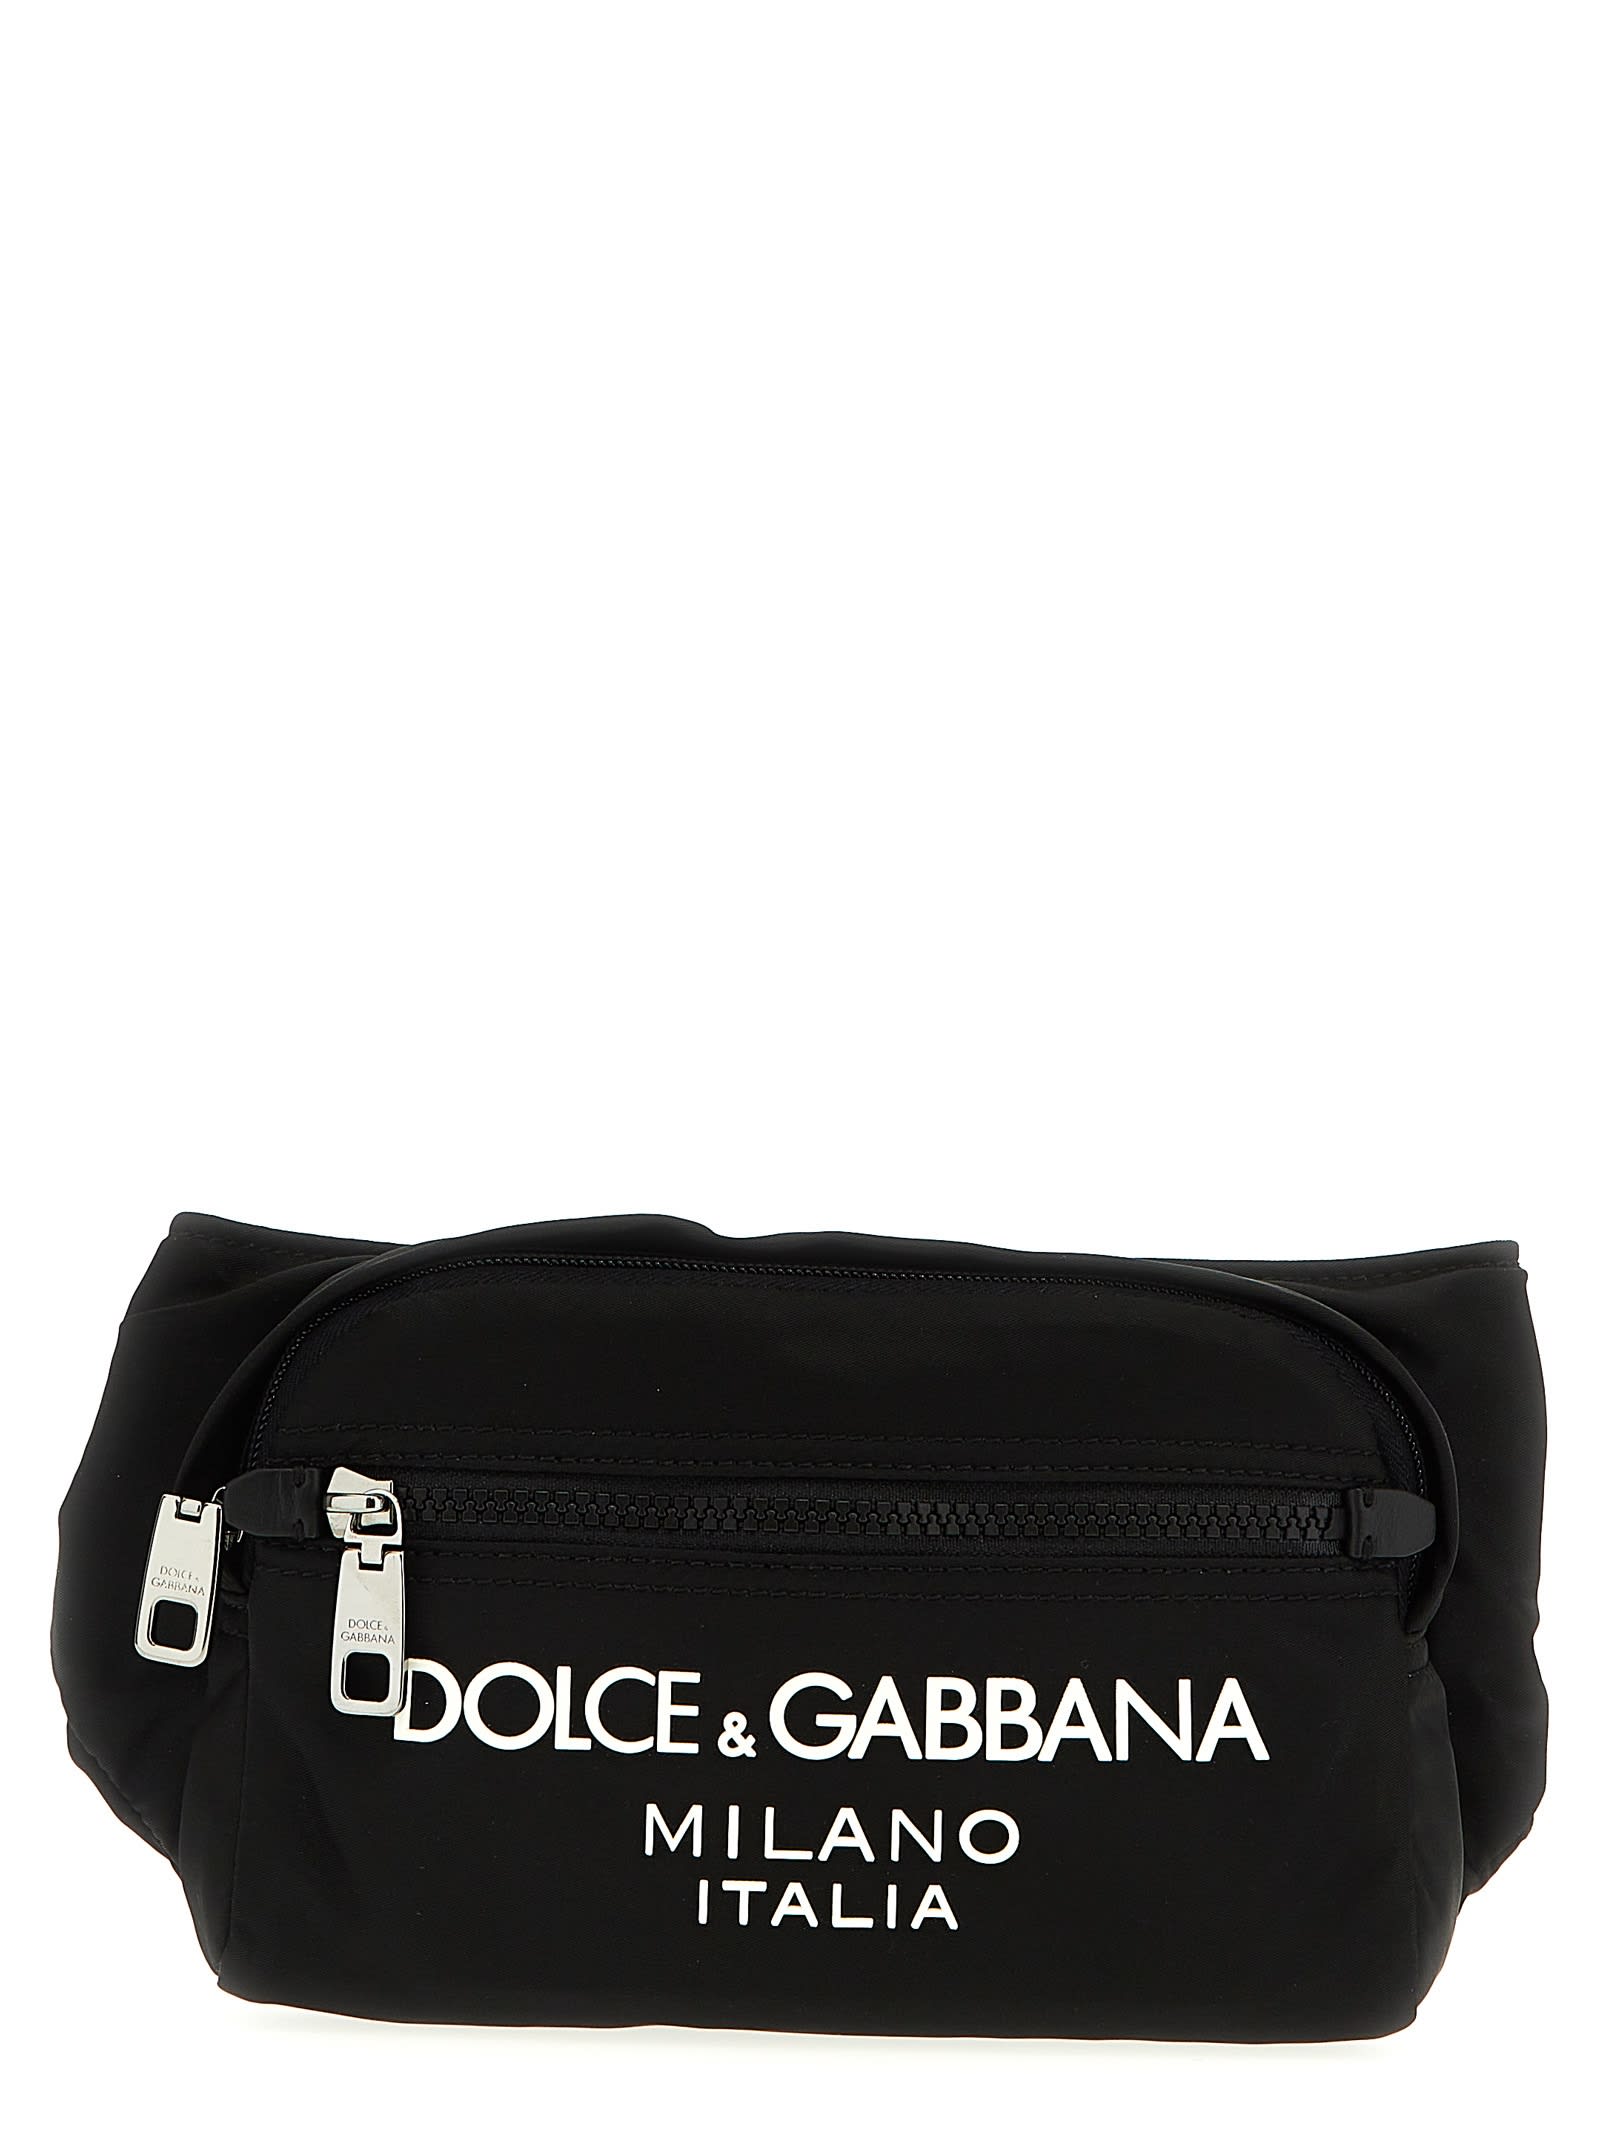 Dolce & Gabbana Logo Fanny Pack In White/black